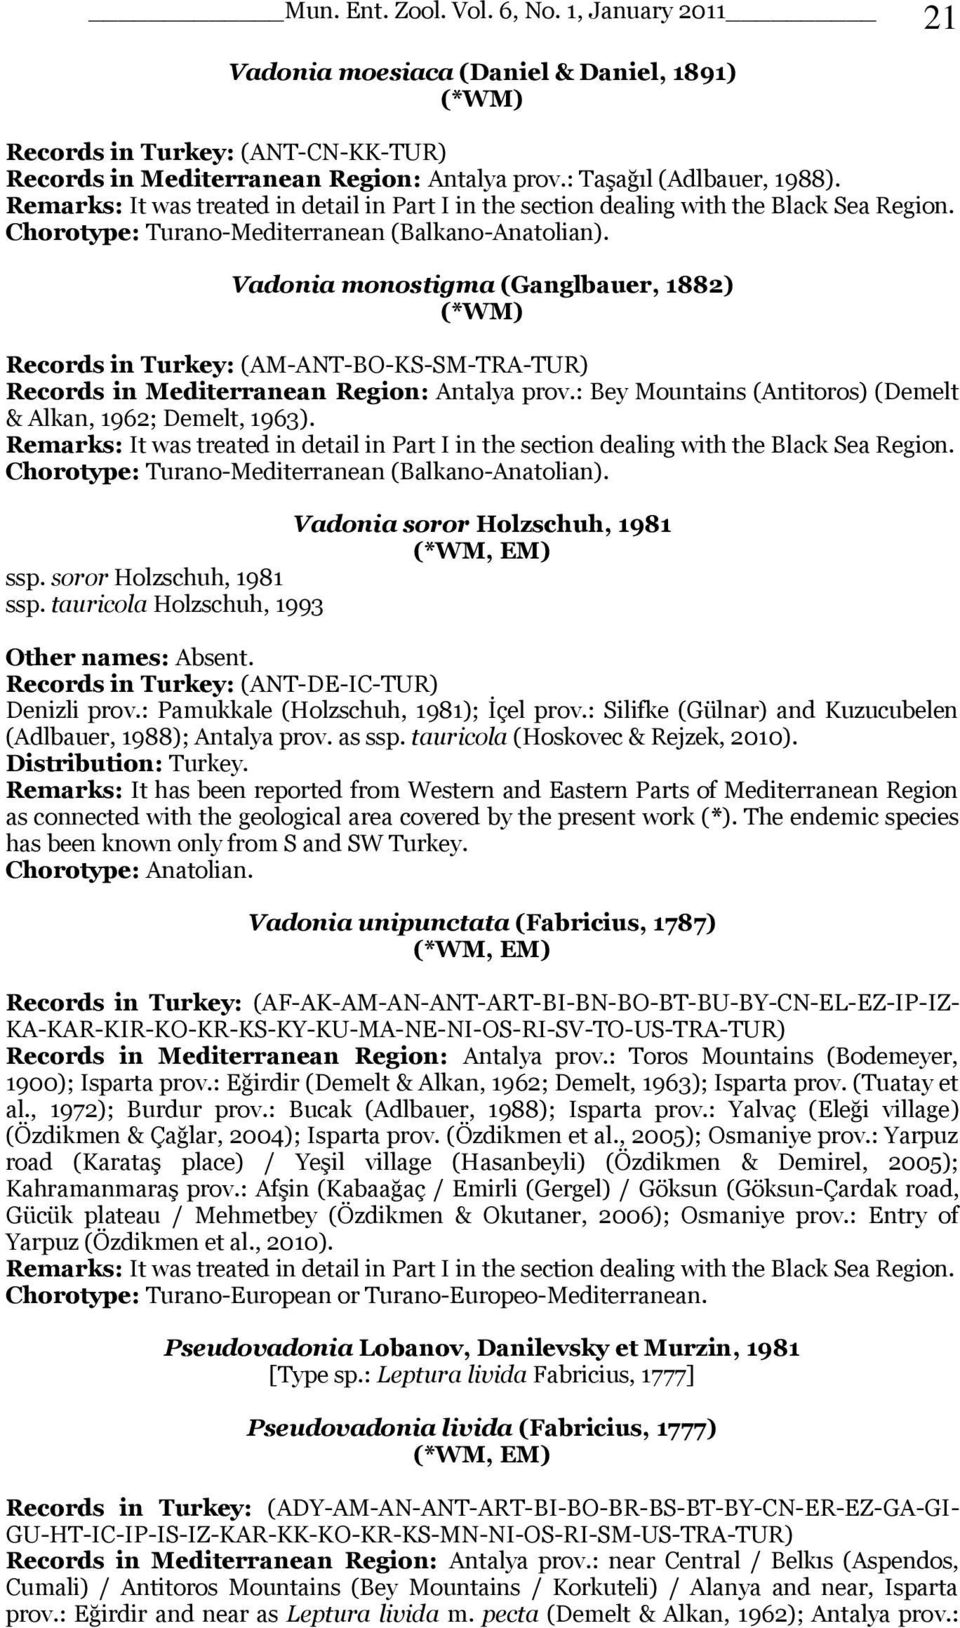 Vadonia monostigma (Ganglbauer, 1882) (*WM) Records in Turkey: (AM-ANT-BO-KS-SM-TRA-TUR) Records in Mediterranean Region: Antalya prov.: Bey Mountains (Antitoros) (Demelt & Alkan, 1962; Demelt, 1963).